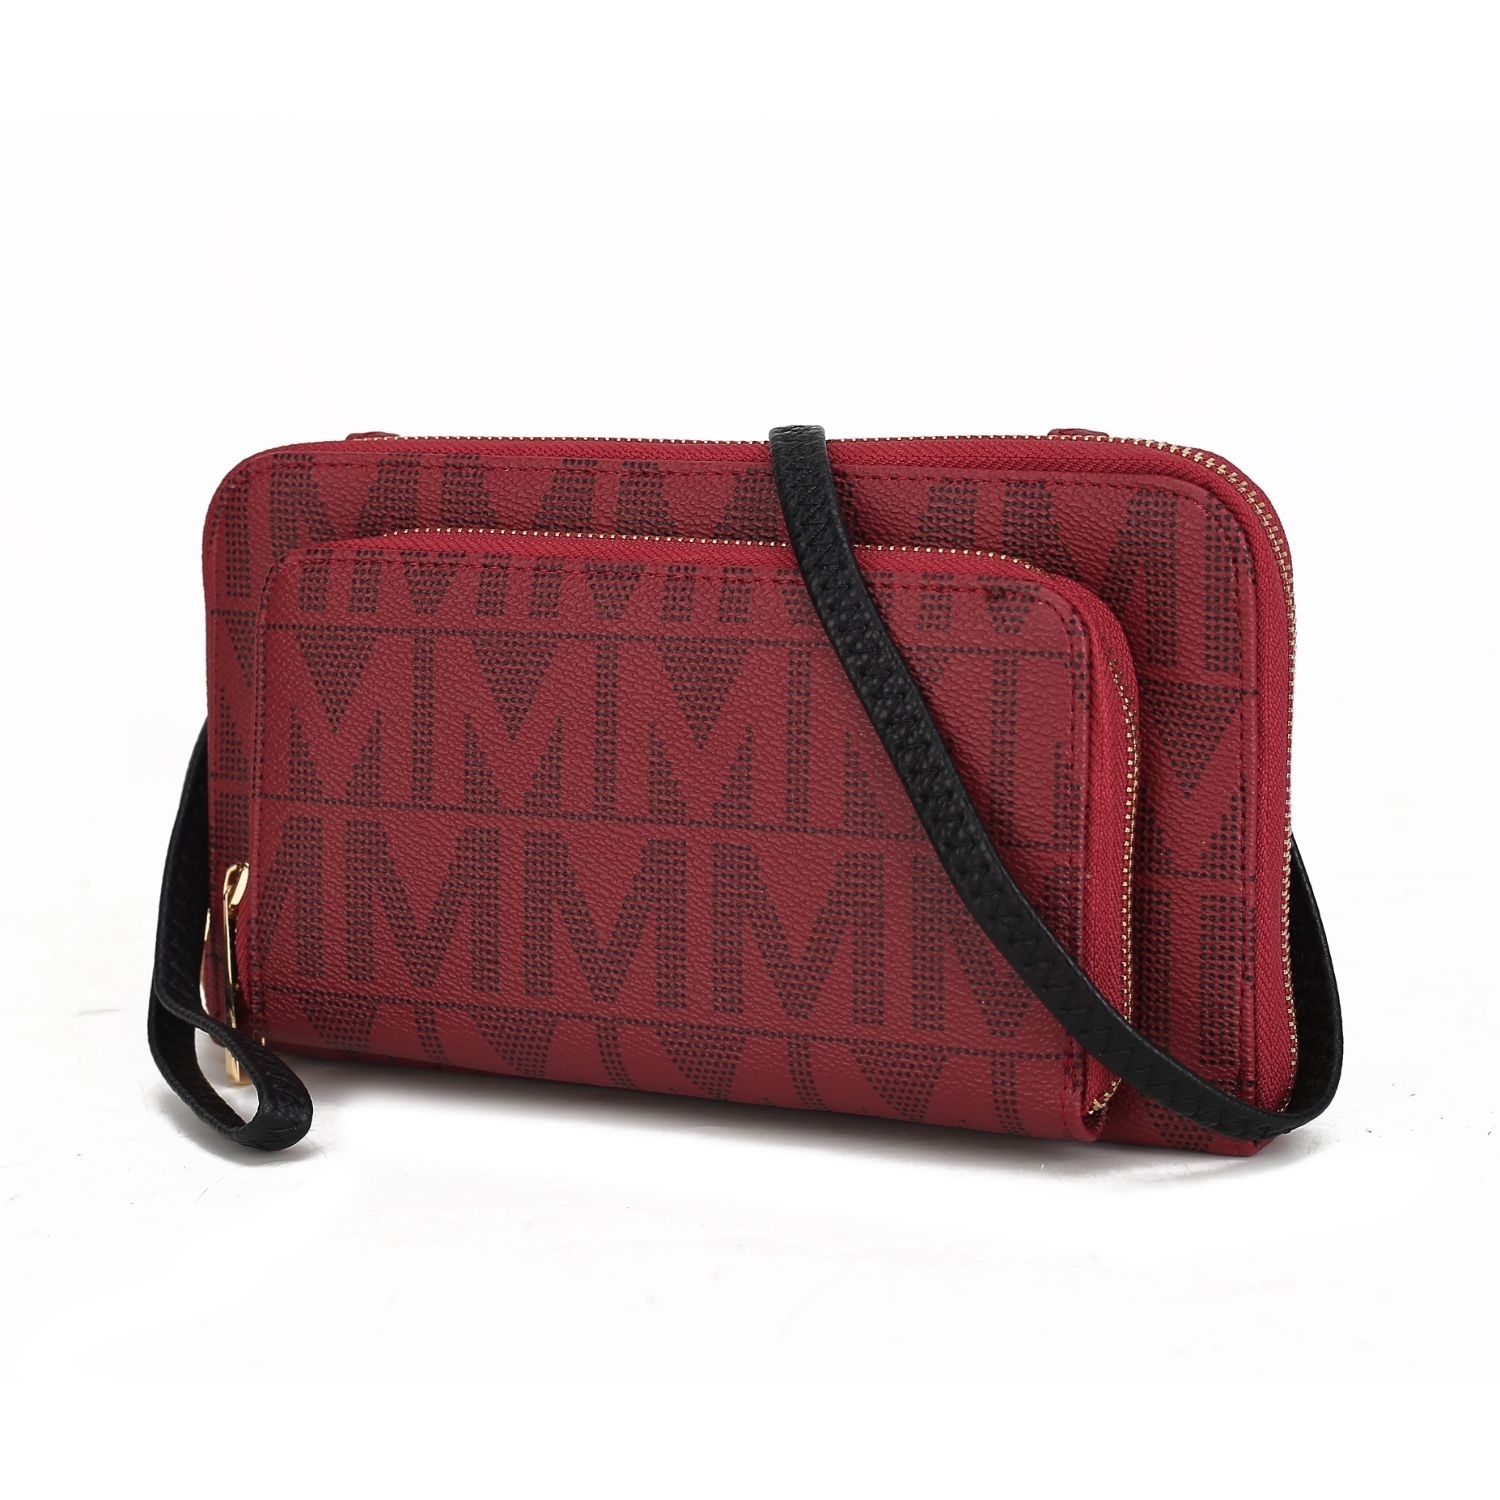 MKF Collection Dilma Wallet Smartphone Convertible Crossbody Handbag By Mia K - Burgundy